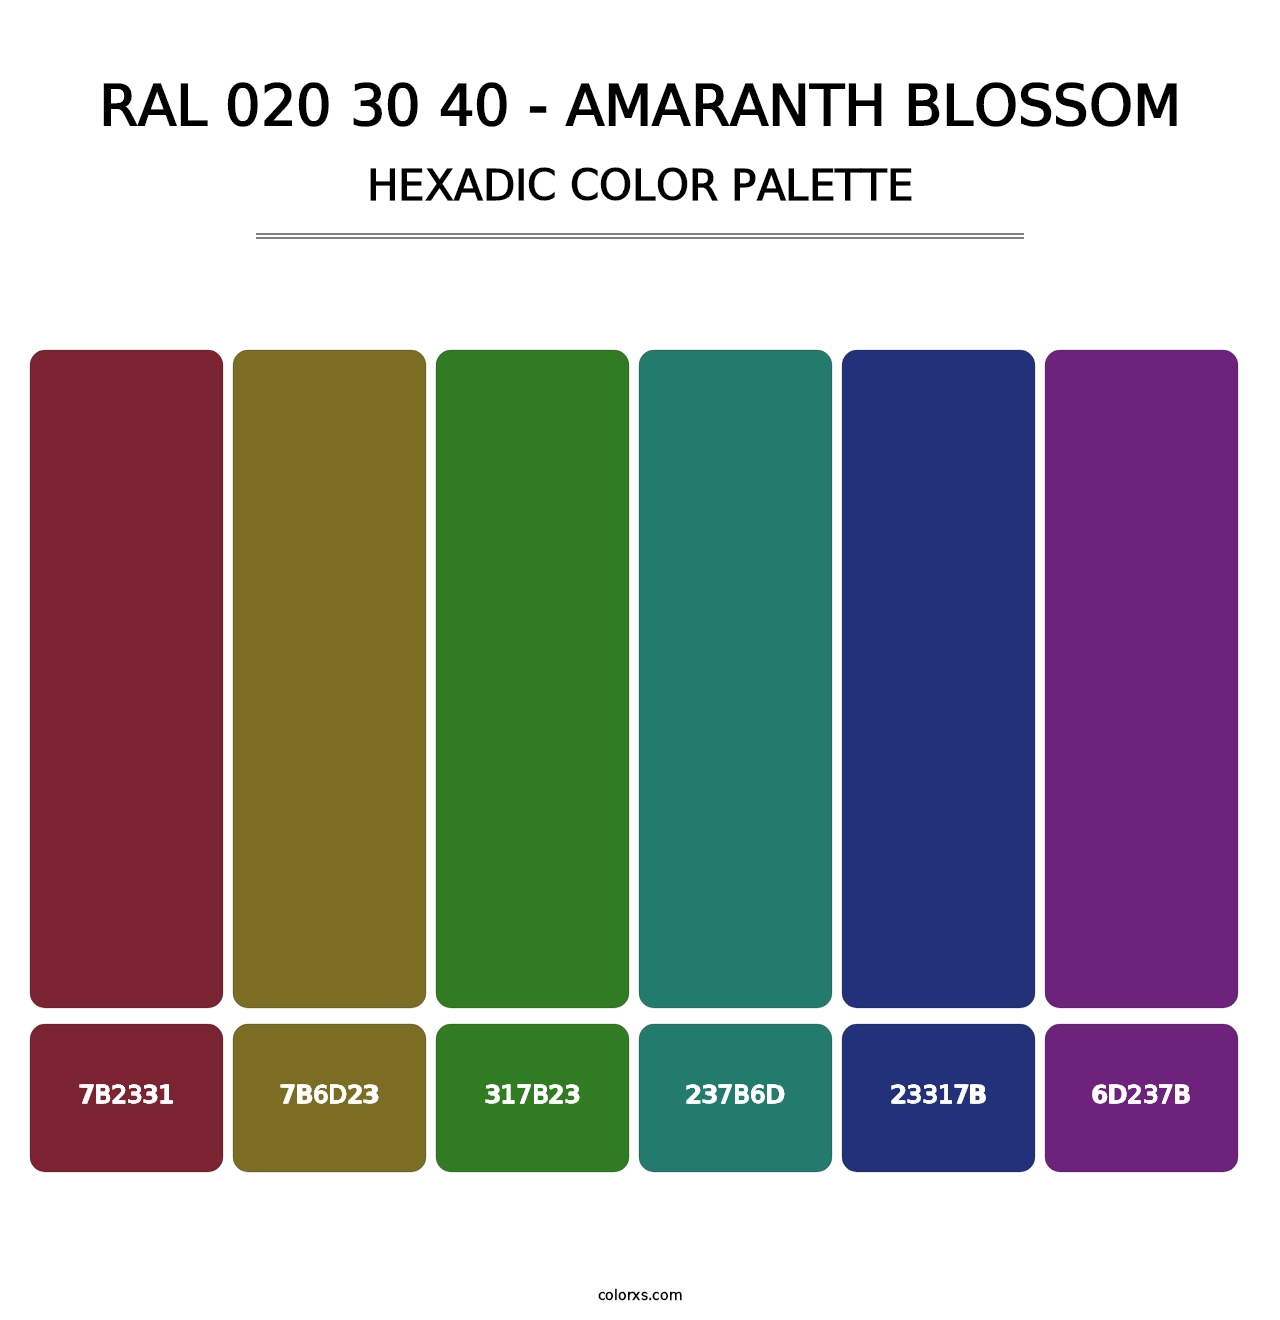 RAL 020 30 40 - Amaranth Blossom - Hexadic Color Palette